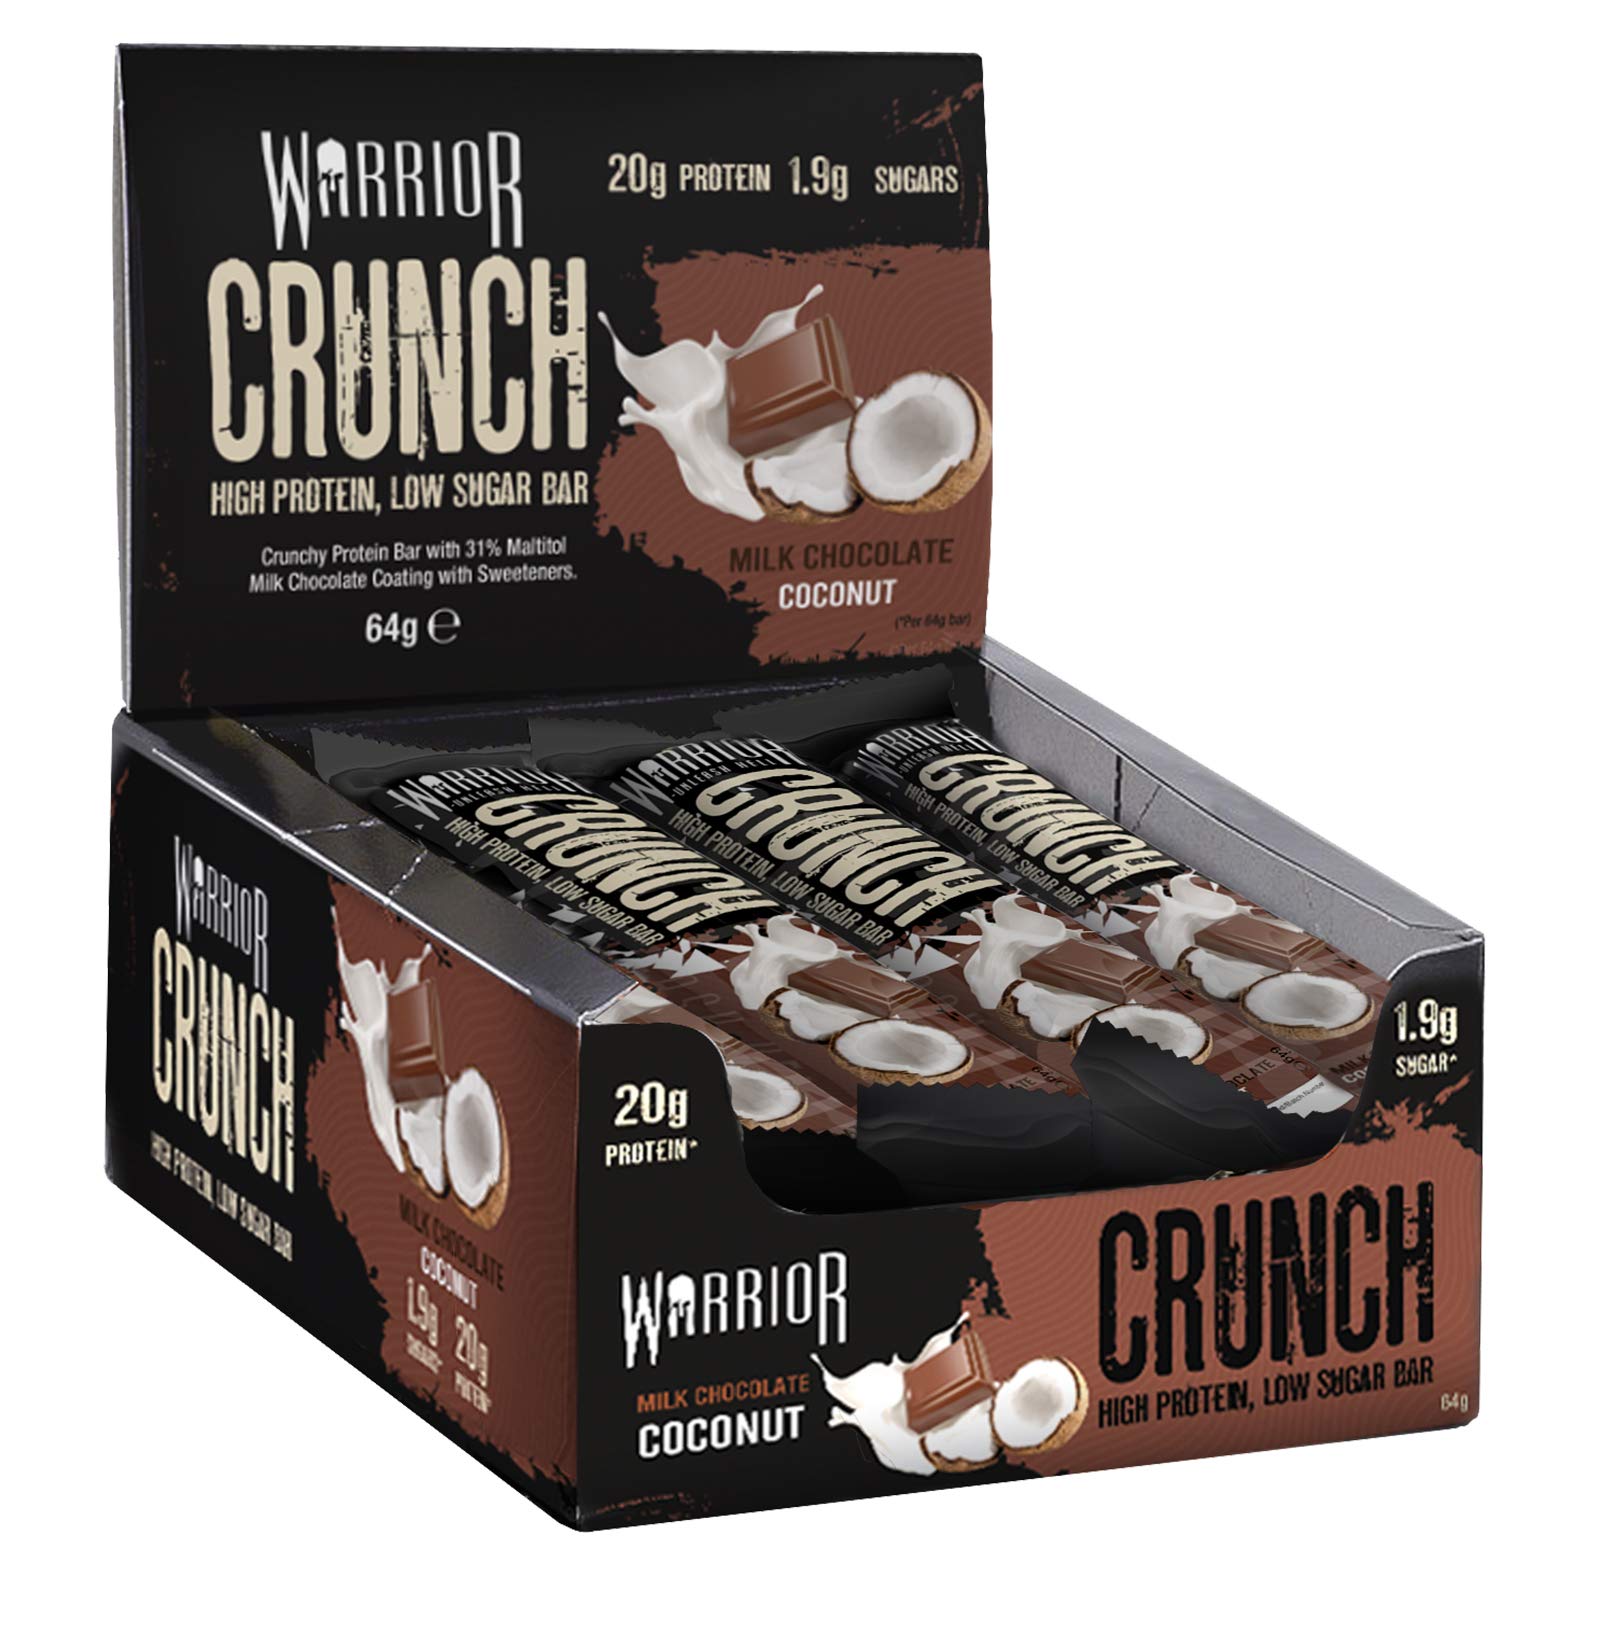 Warrior, CRUNCH - High Protein Bars - 20g Protein Each Bar - 12 Pack x 64g (Milk Chocolate Coconut)